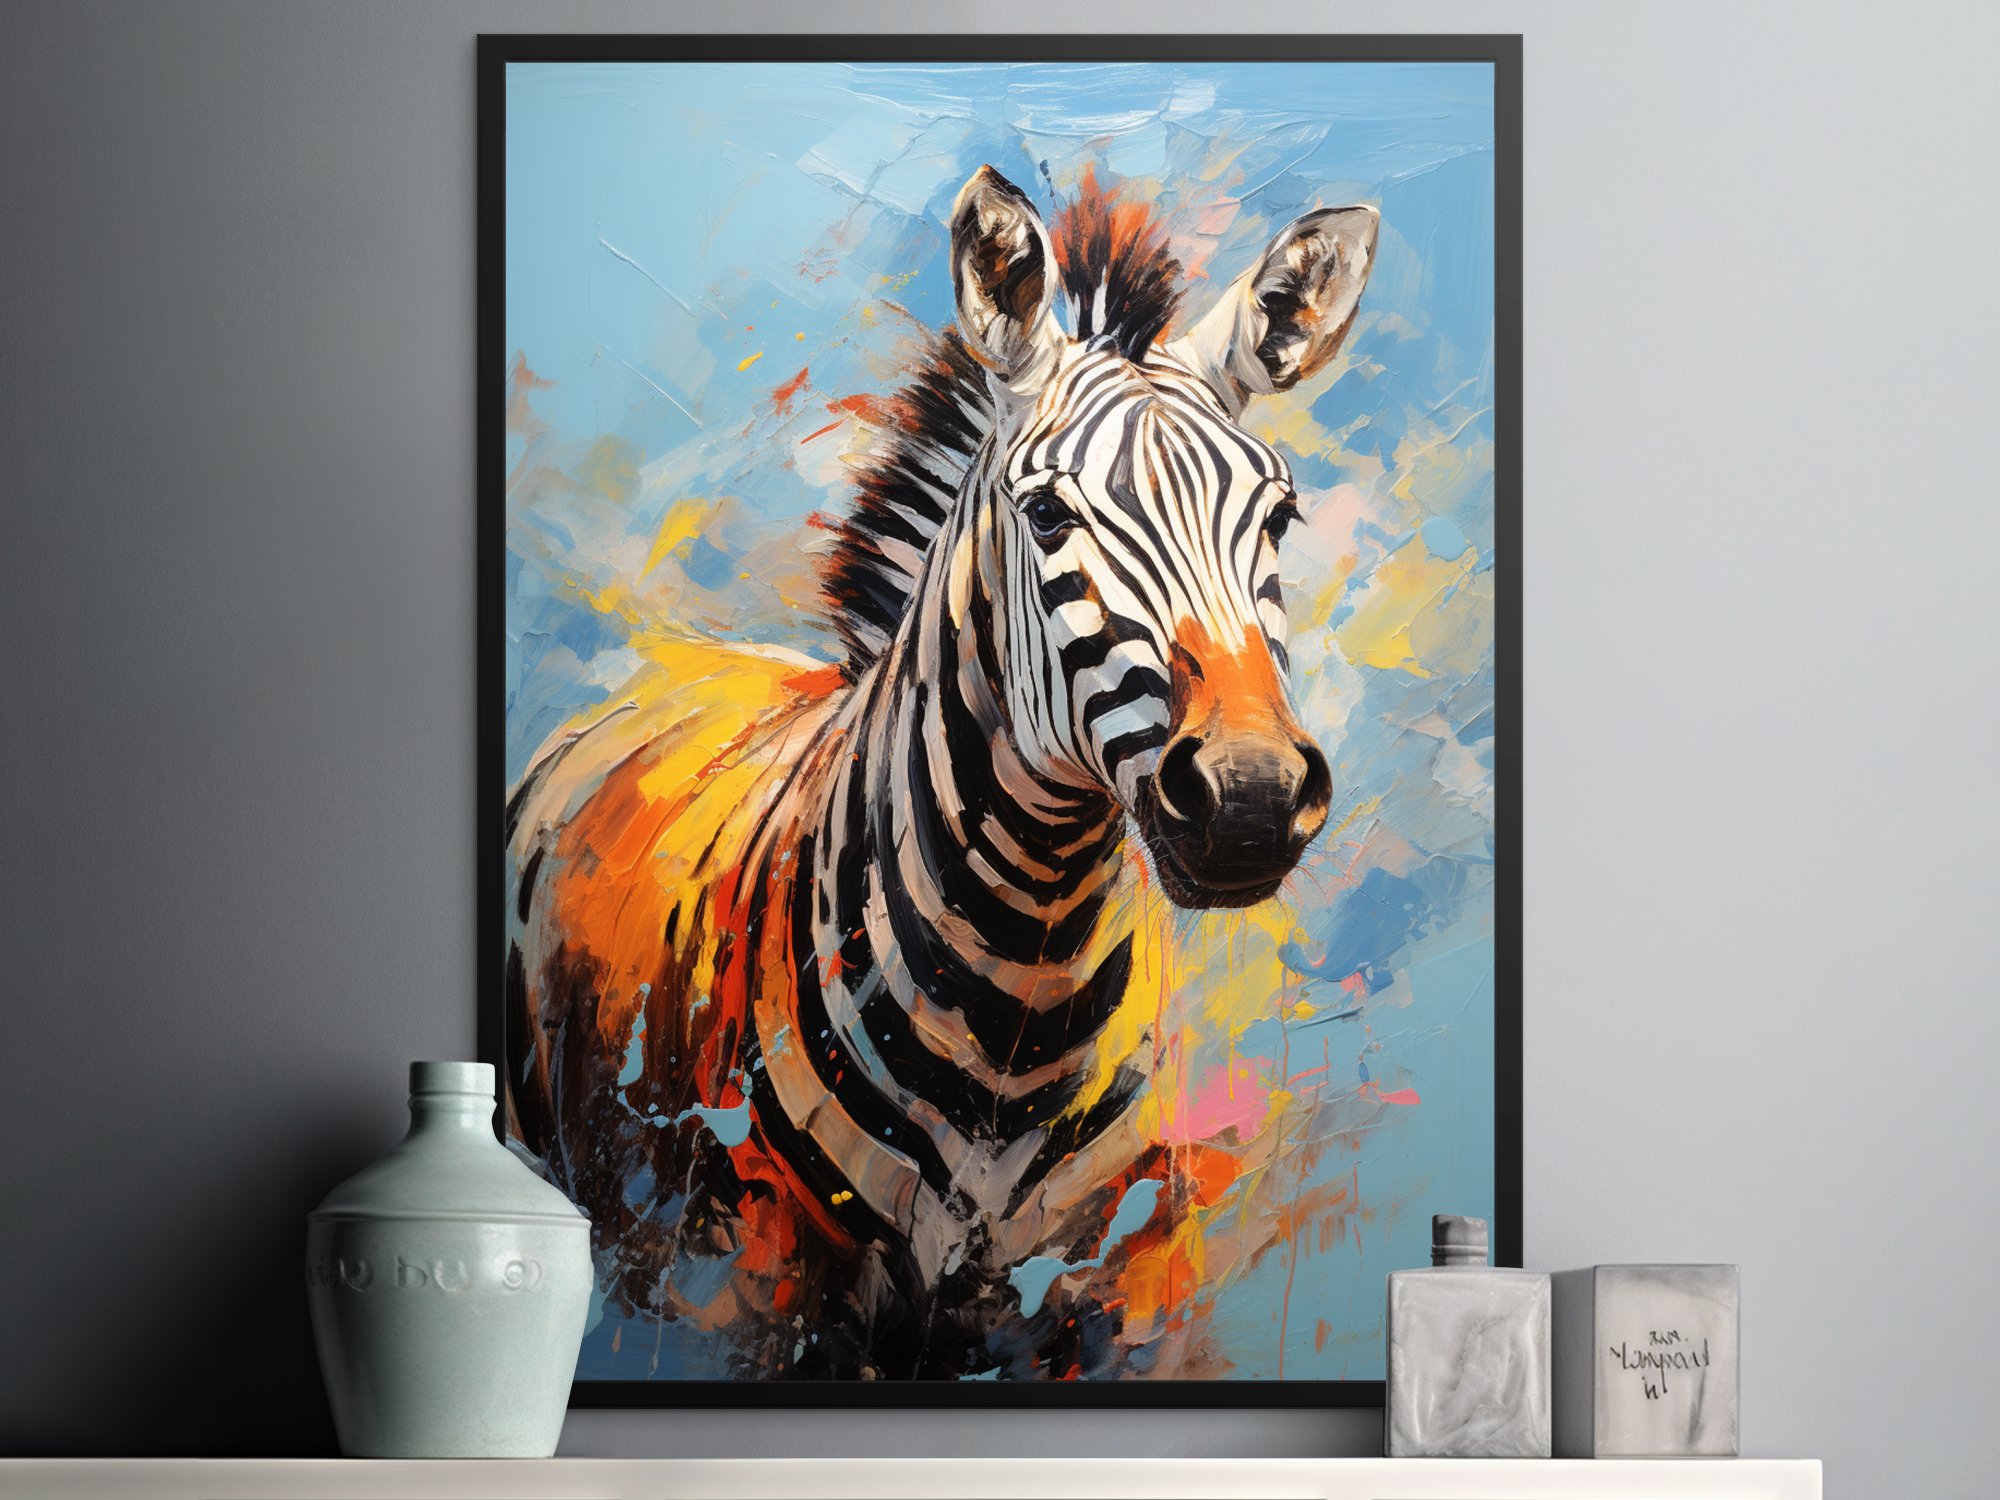 Close up of zebra impasto wall art portrait showcasing thick, textured brushstrokes